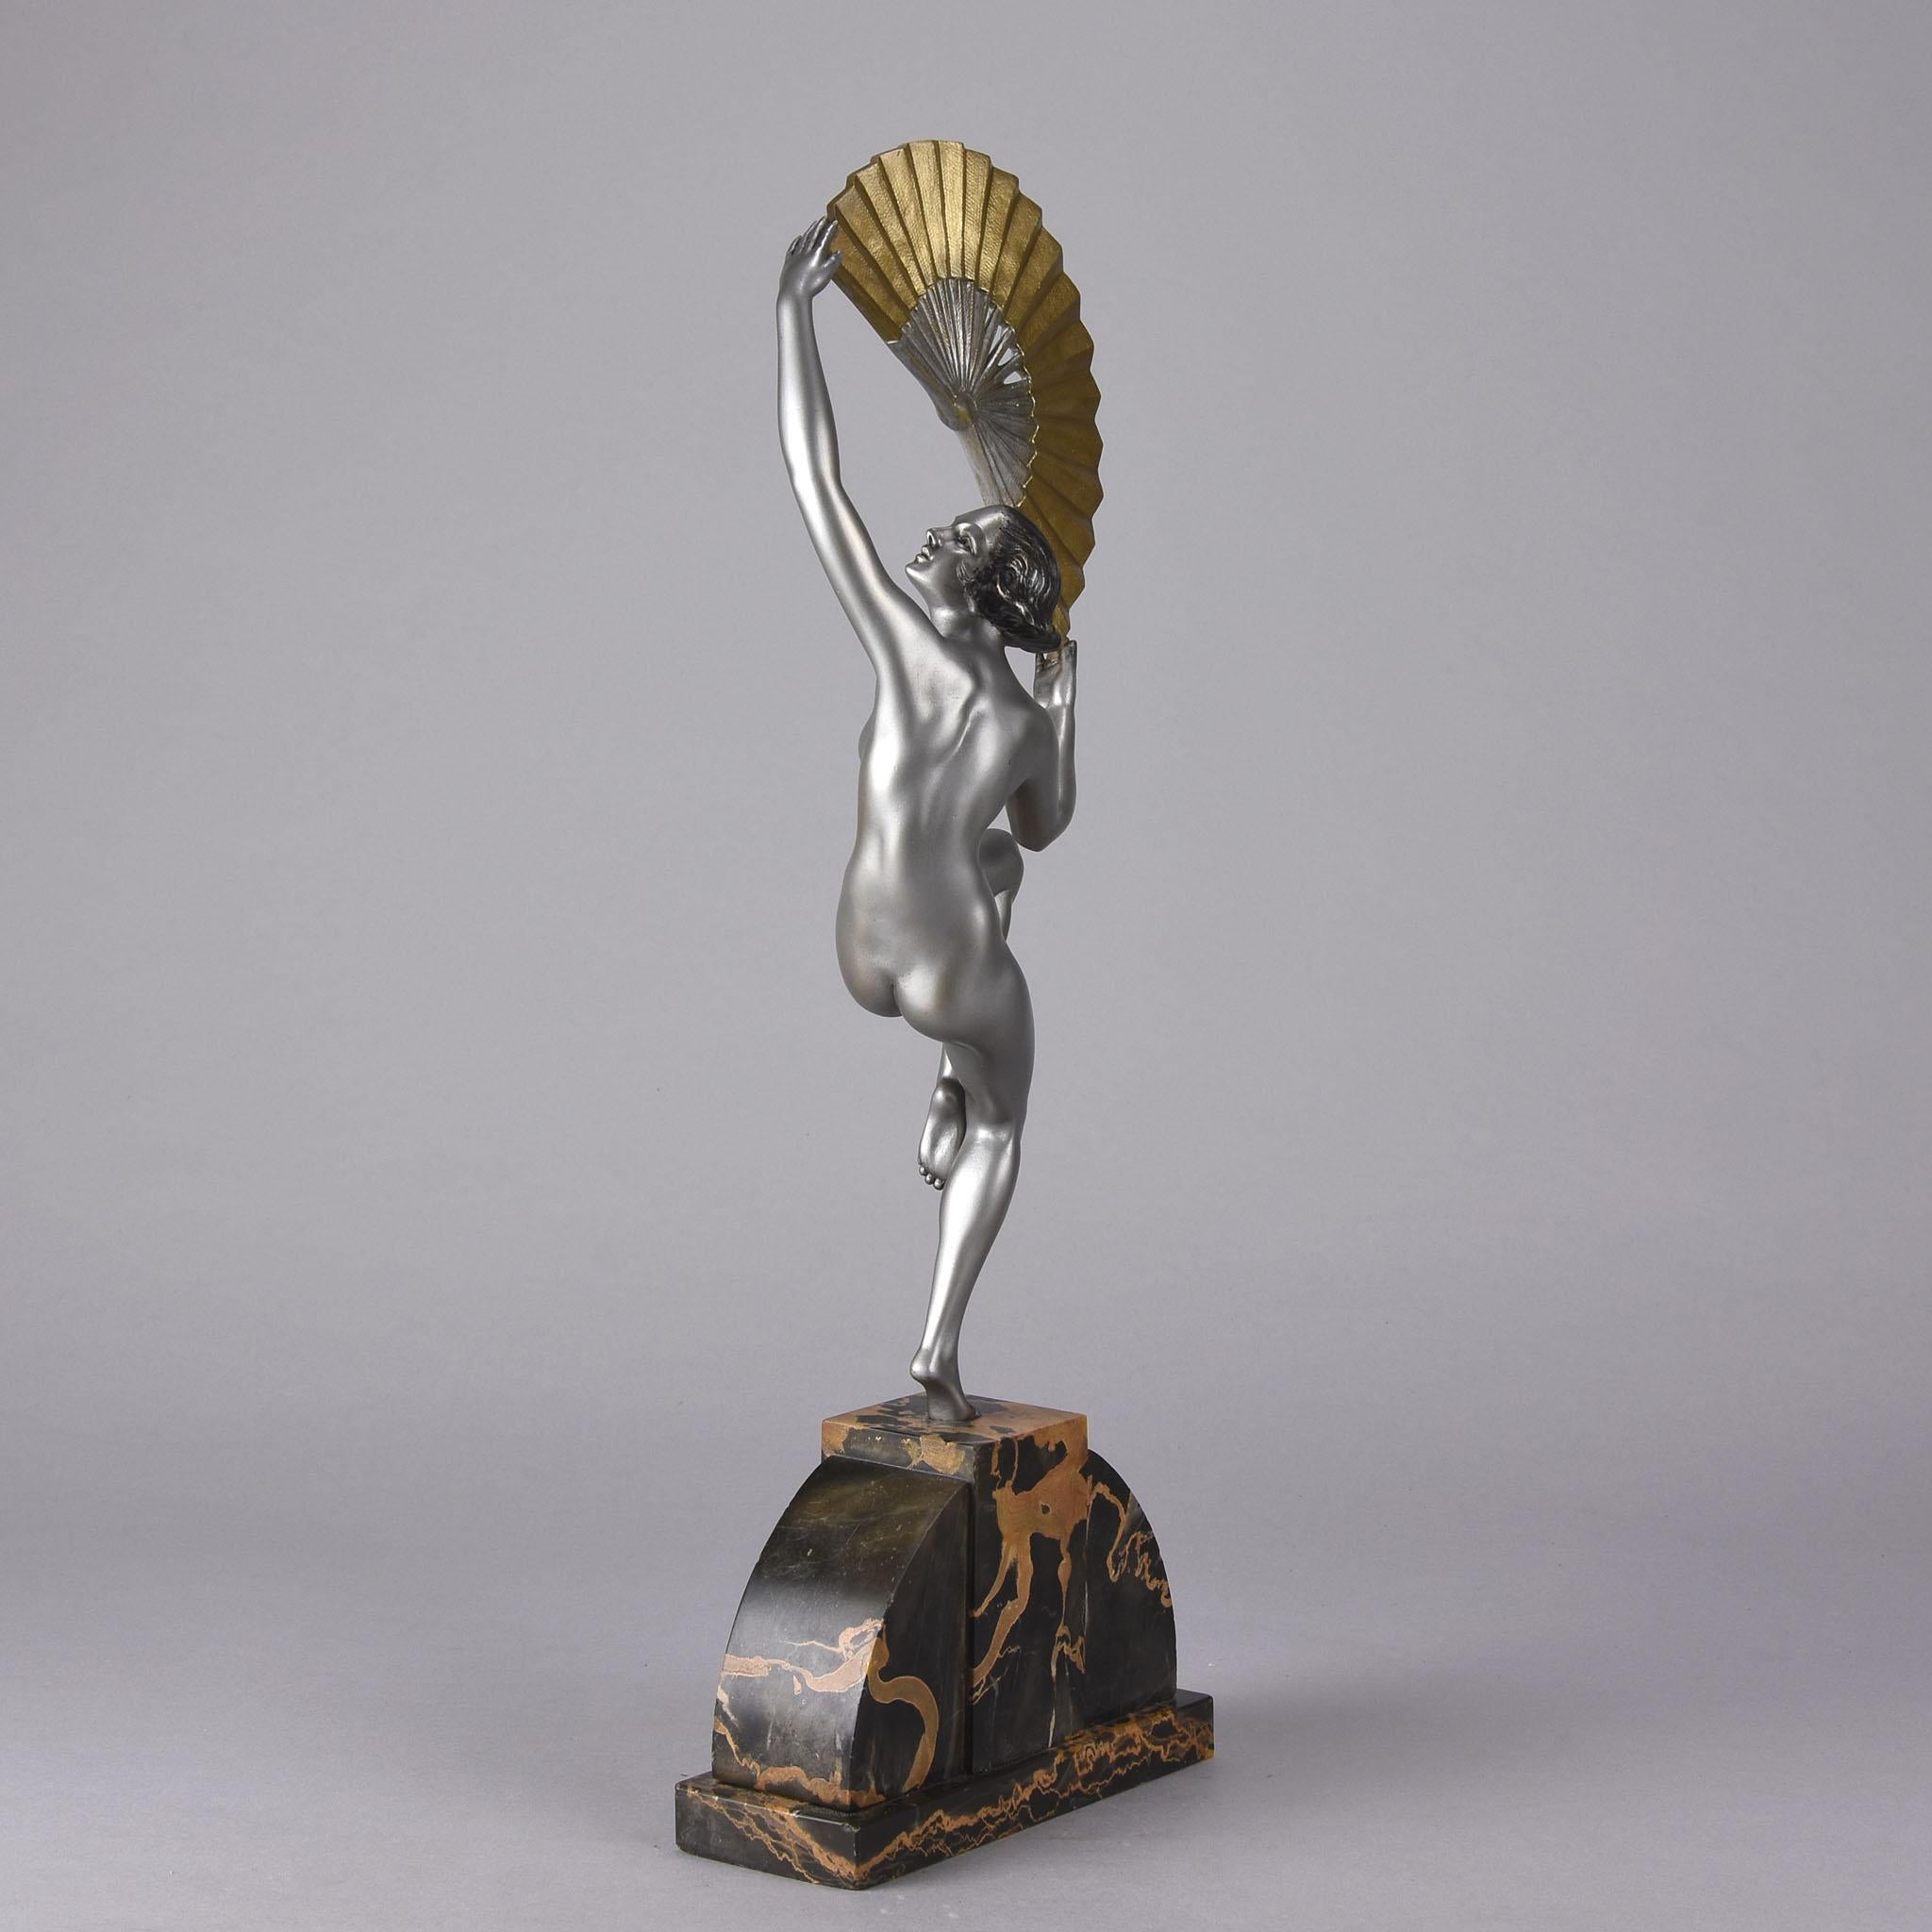 20th Century Art Deco Cold Painted Bronze Figure' 'Fan Dancer' by Marcel Bouraine